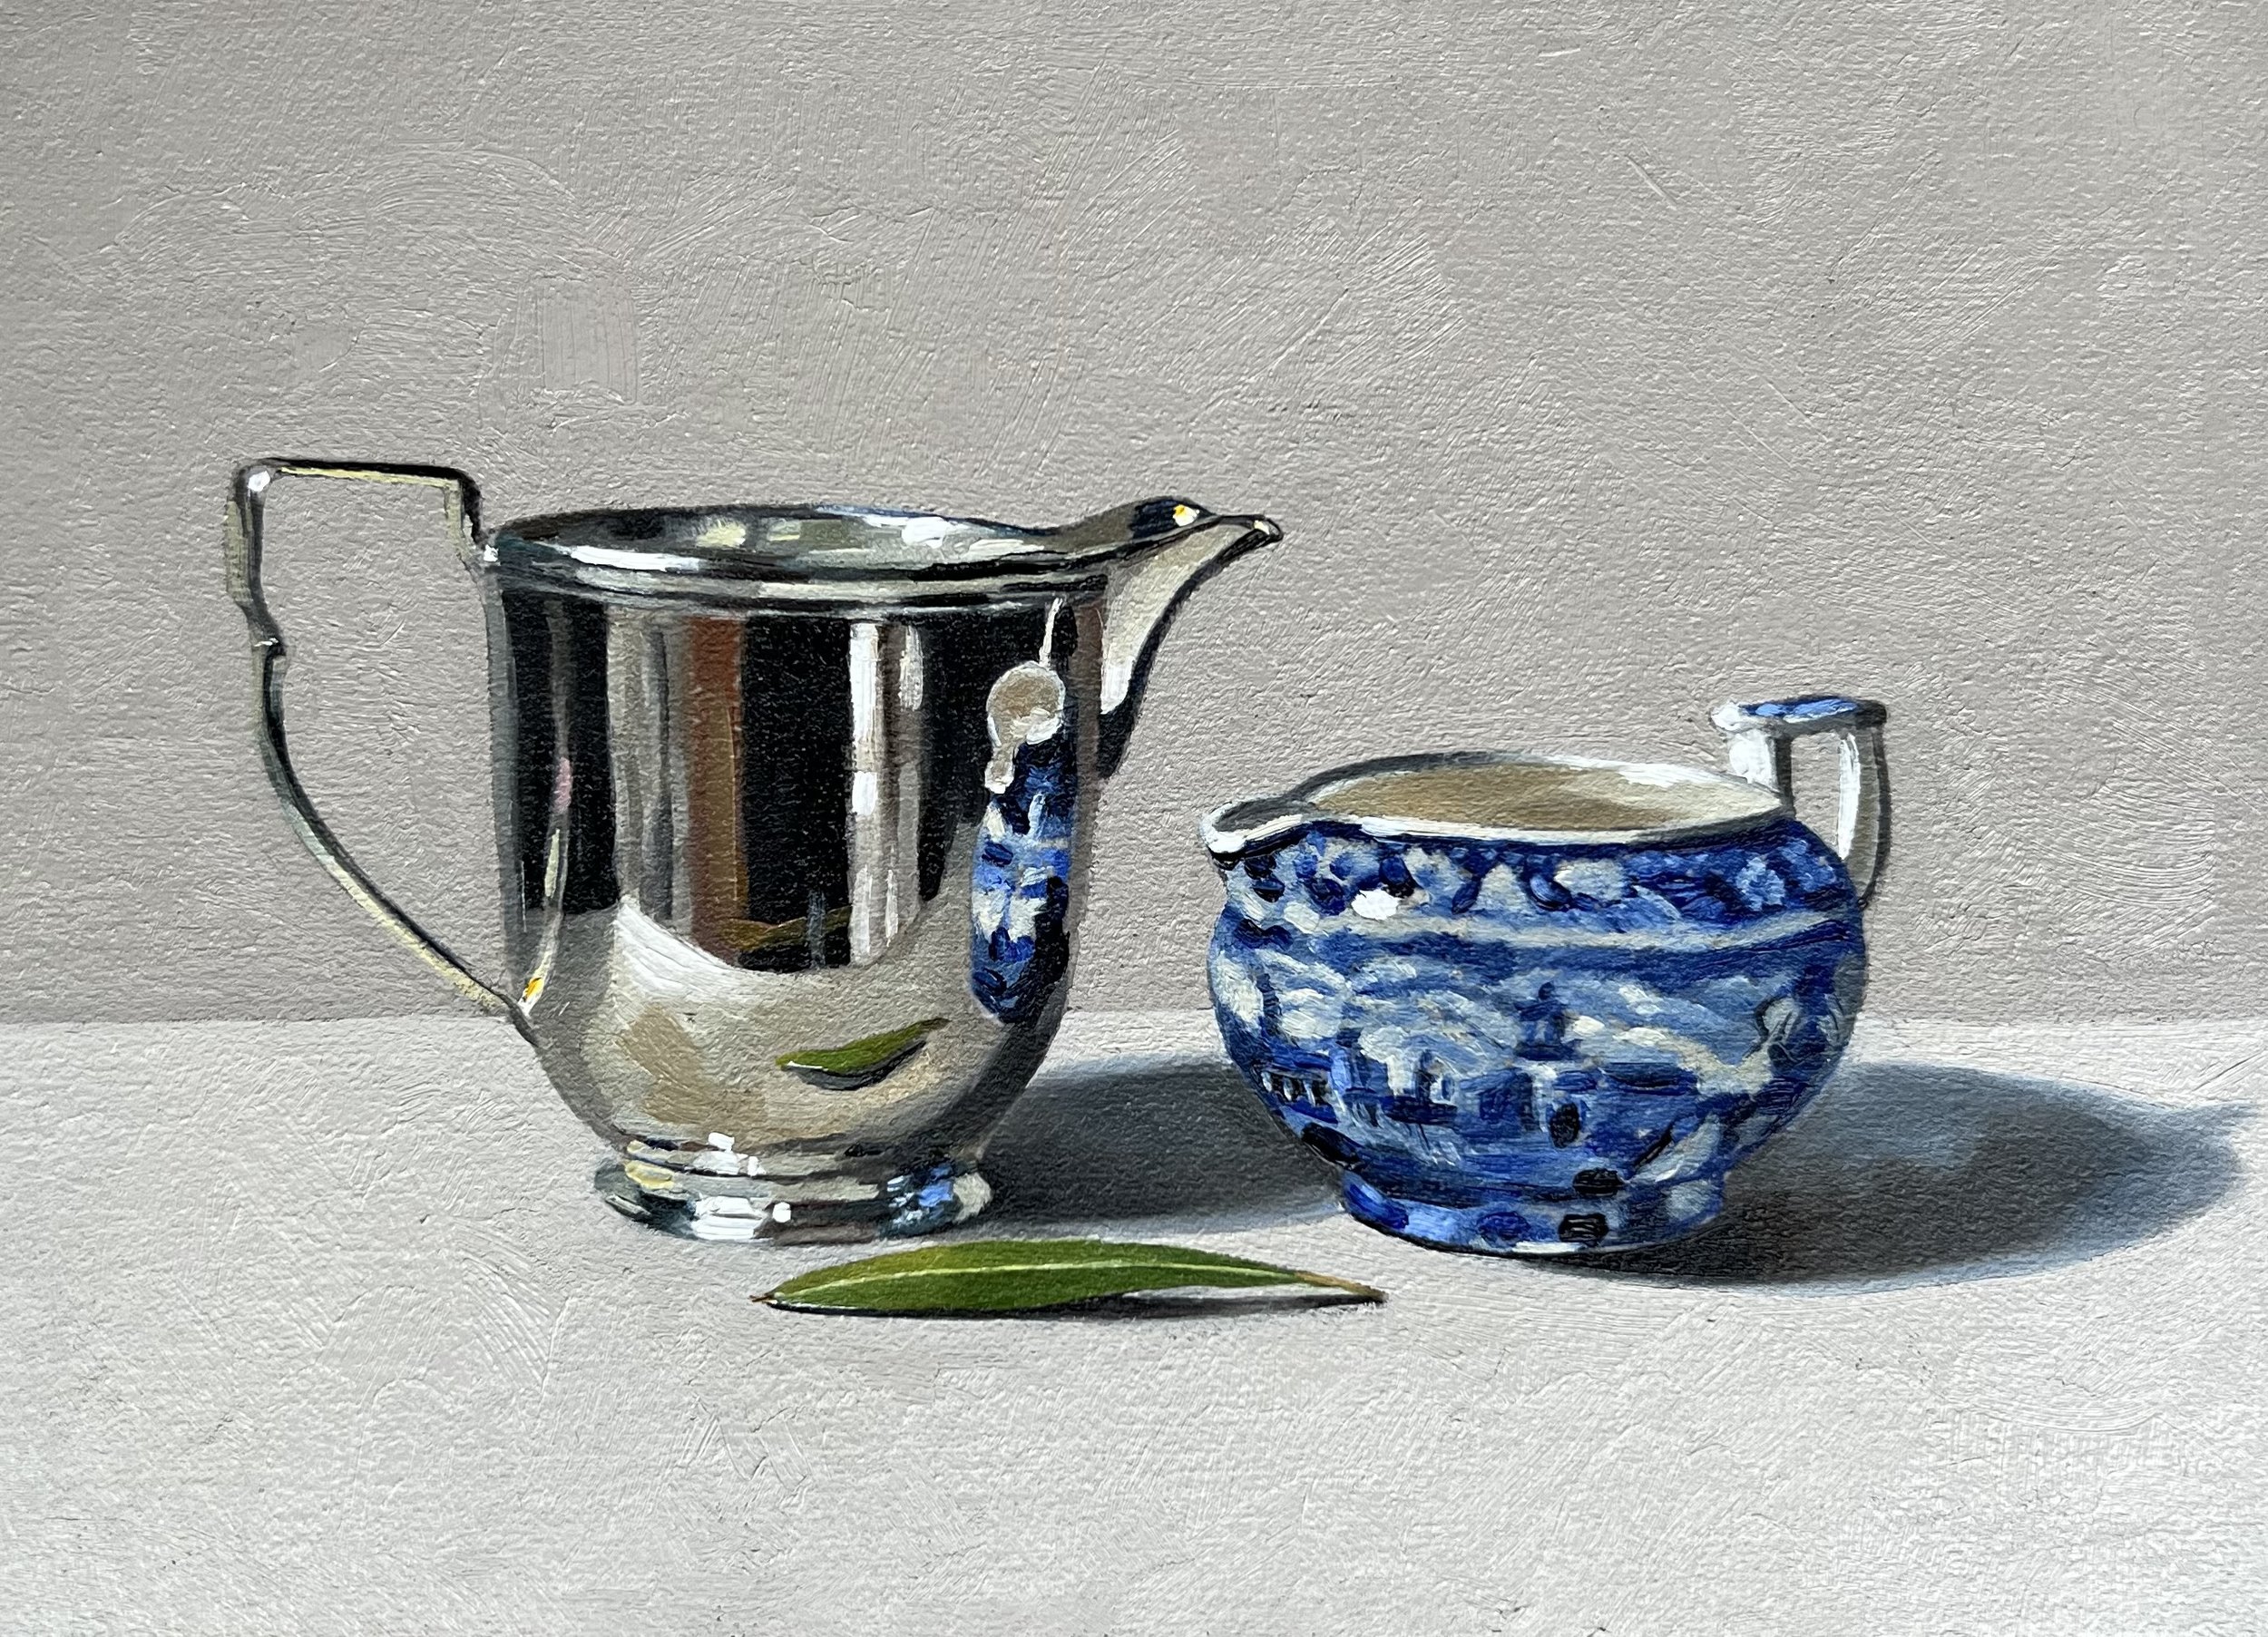 Silver jug, wedgwood jug and olive leaf